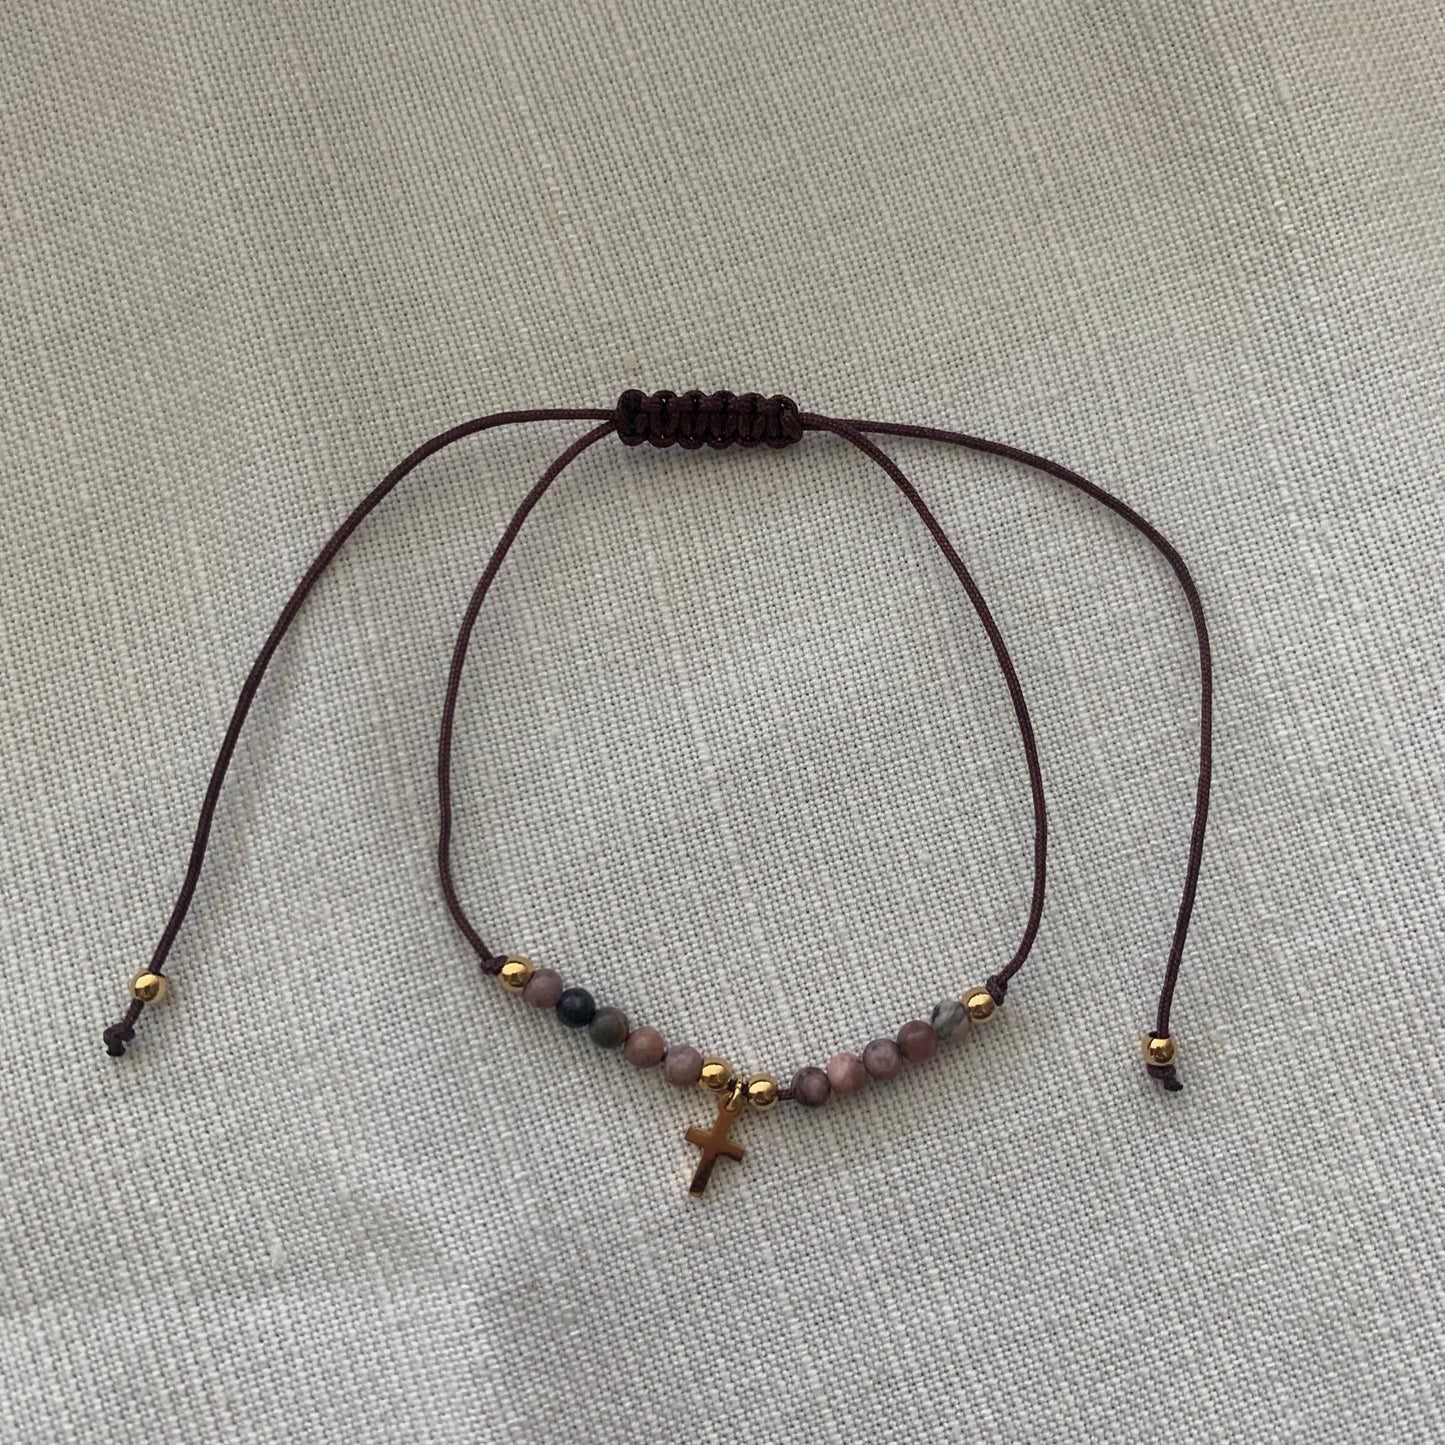 Marble Decade Rosary Bracelet